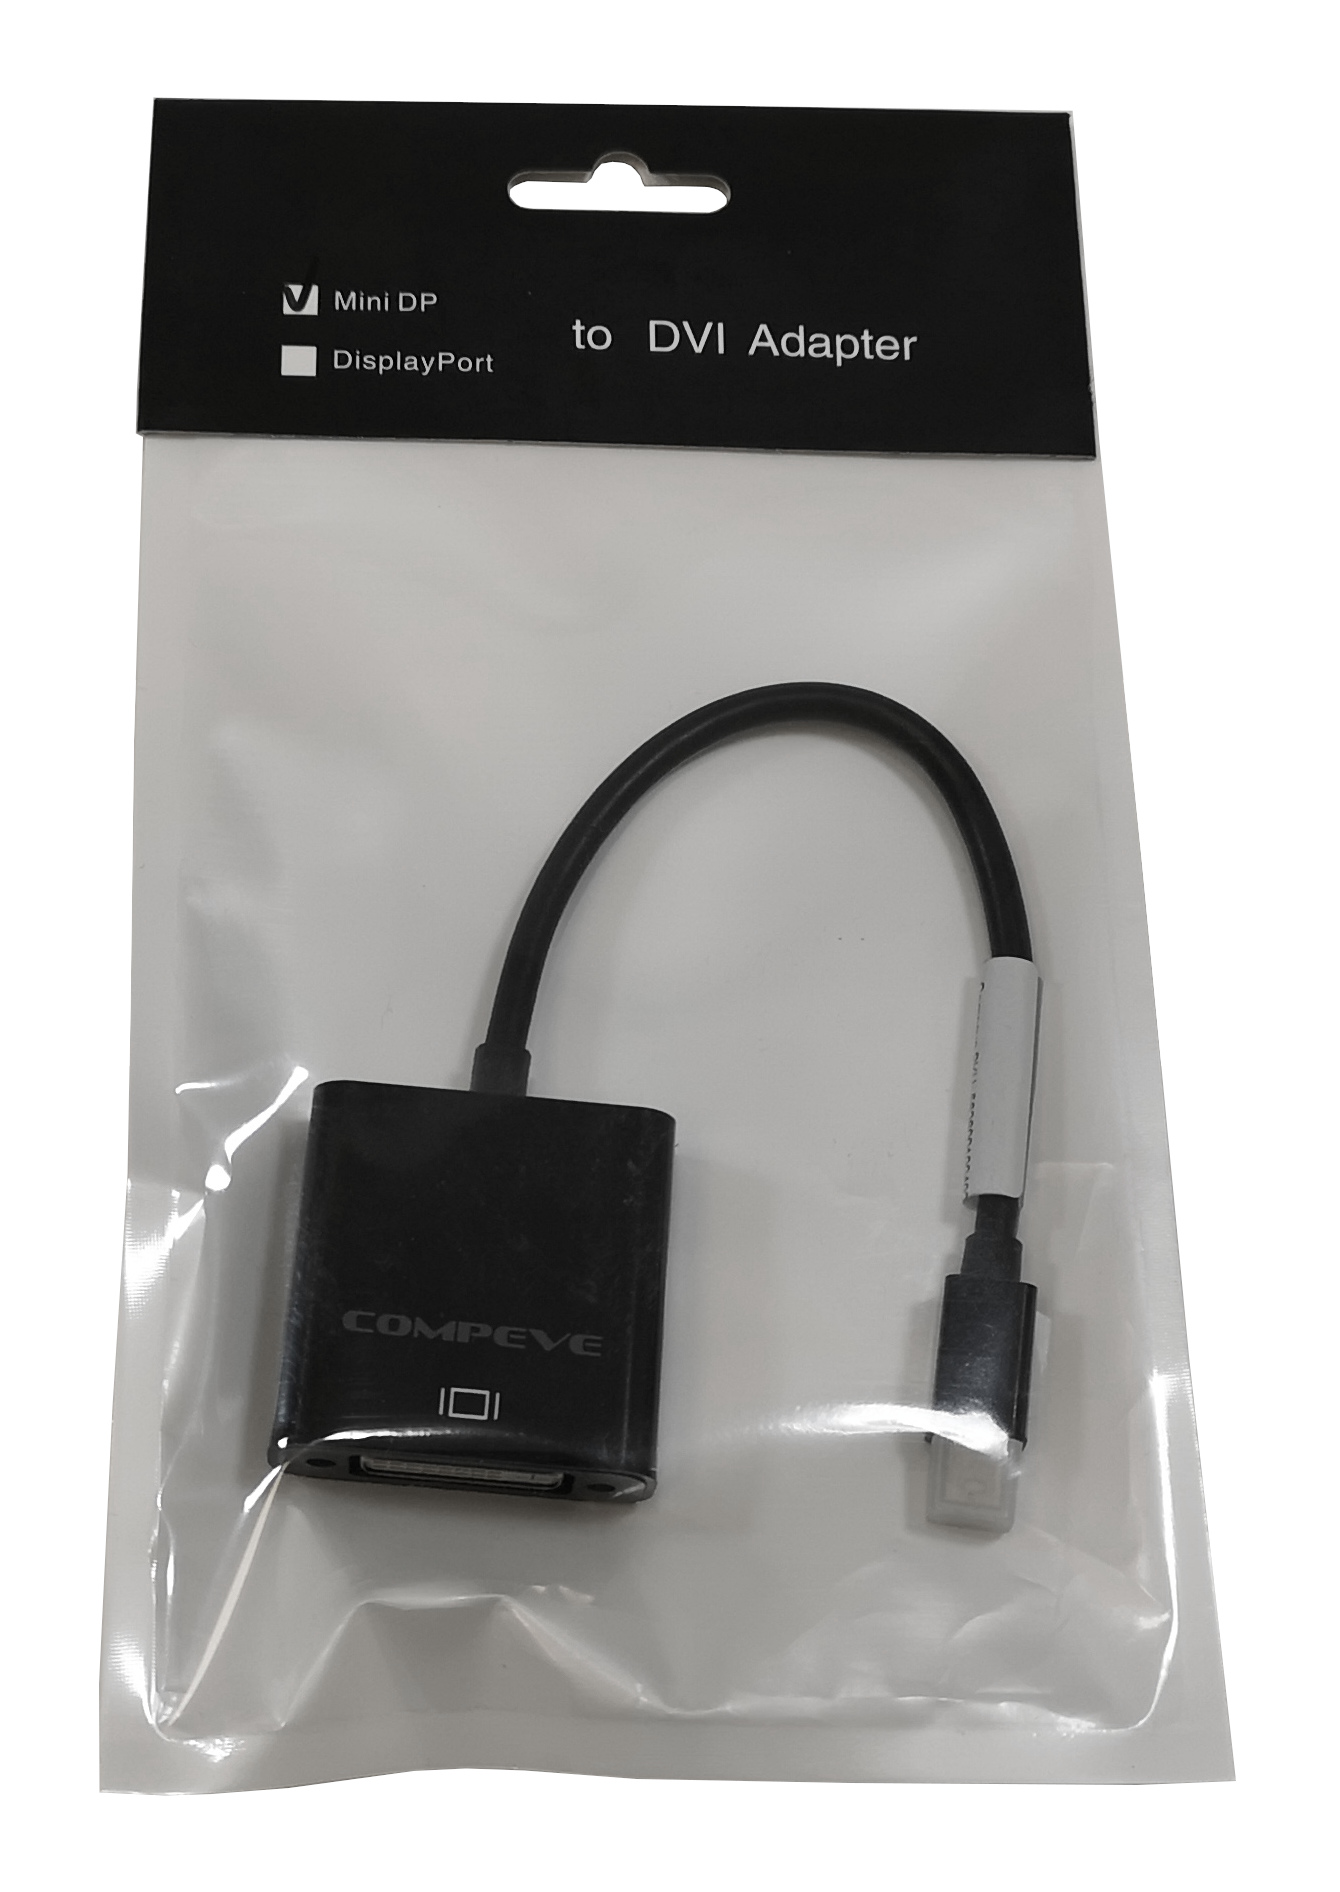 Compeve mini DP Thunderbolt to DVI Adapter Cable Converter Black 562600100402